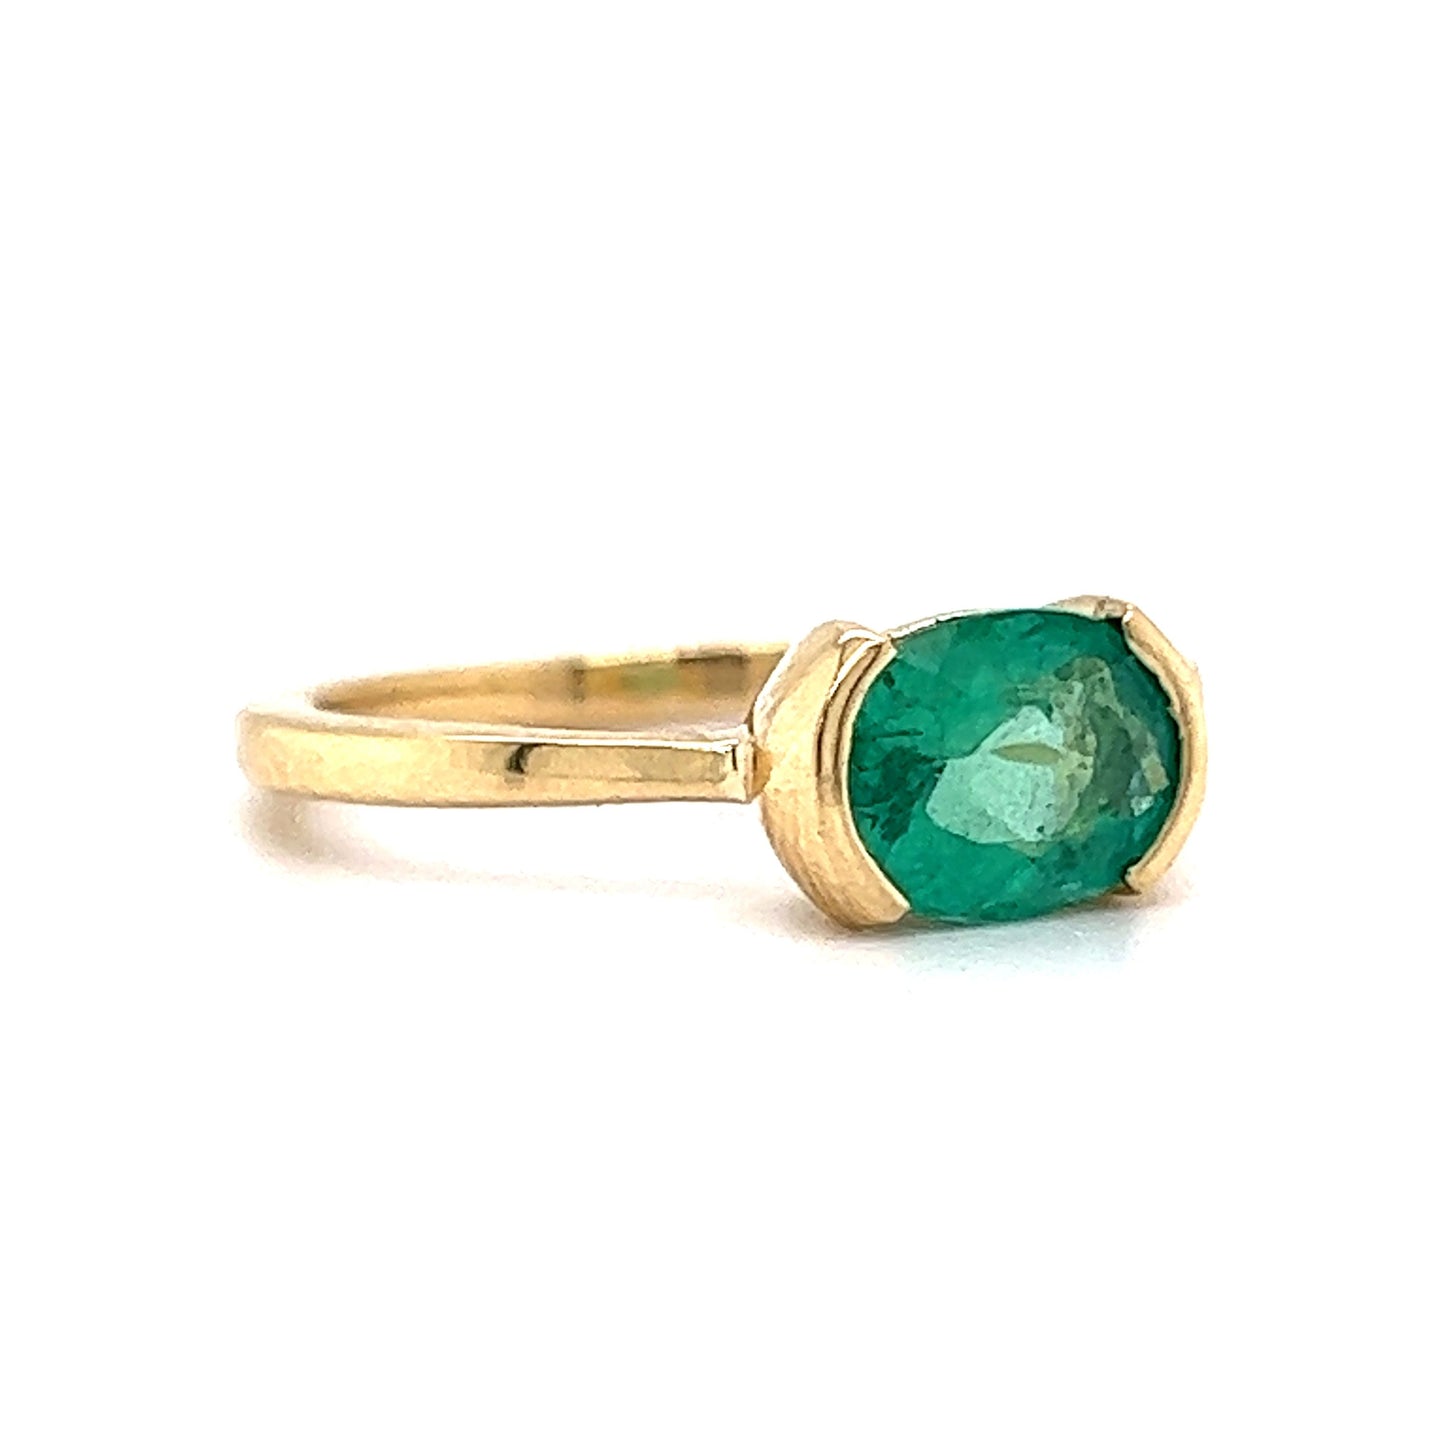 Half Bezel Set Oval Cut Emerald Ring in 14k Yellow Gold